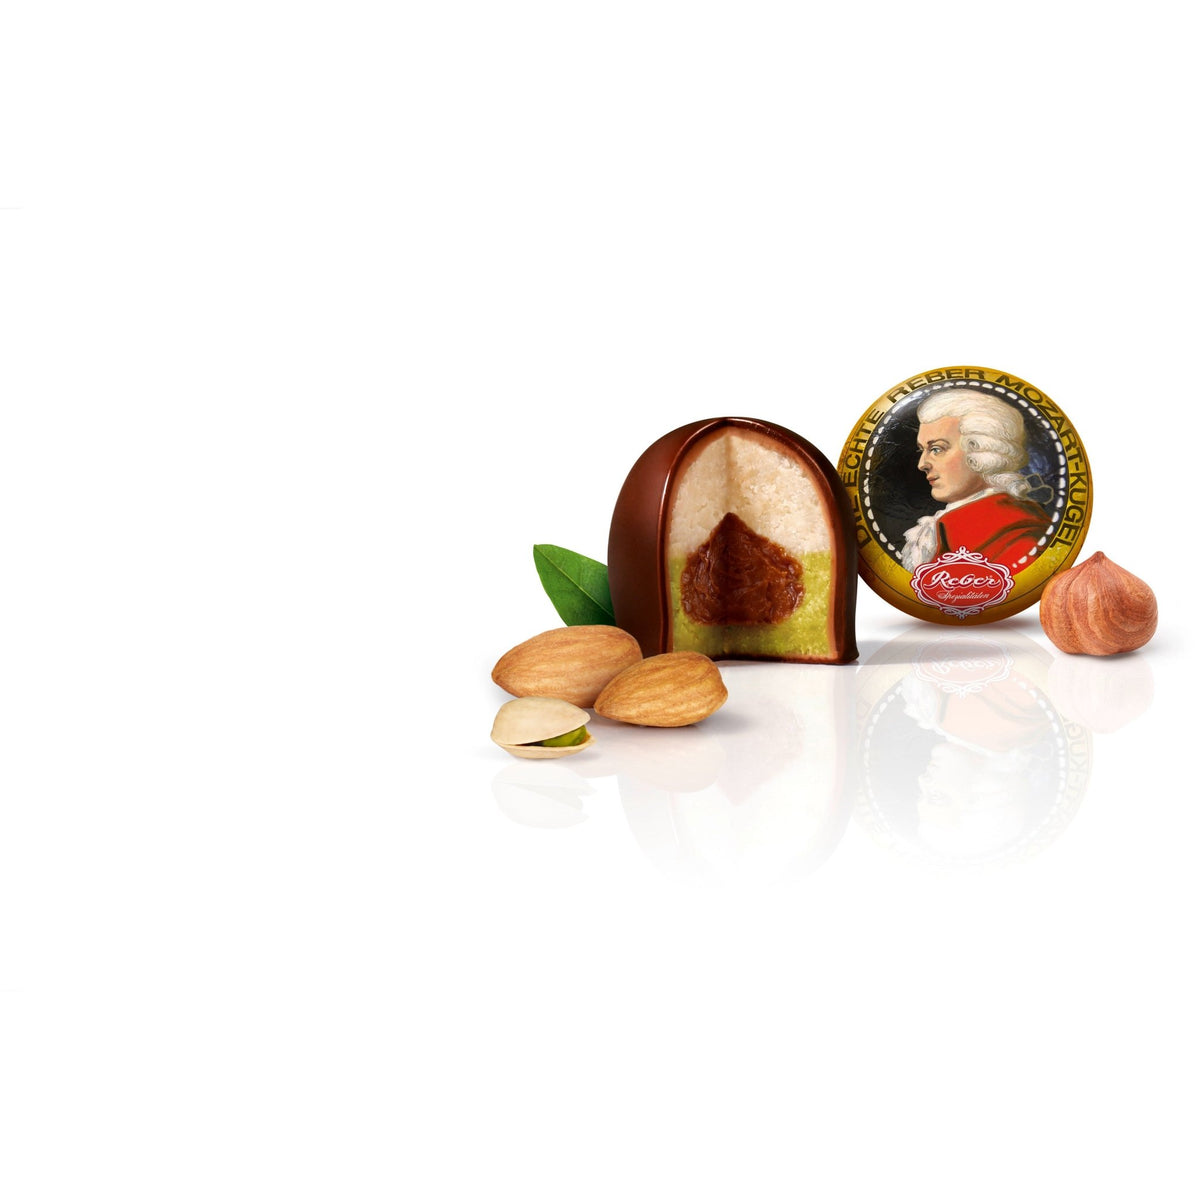 Reber Mozart Kugel in Display Box (45 Pieces) – European Deli